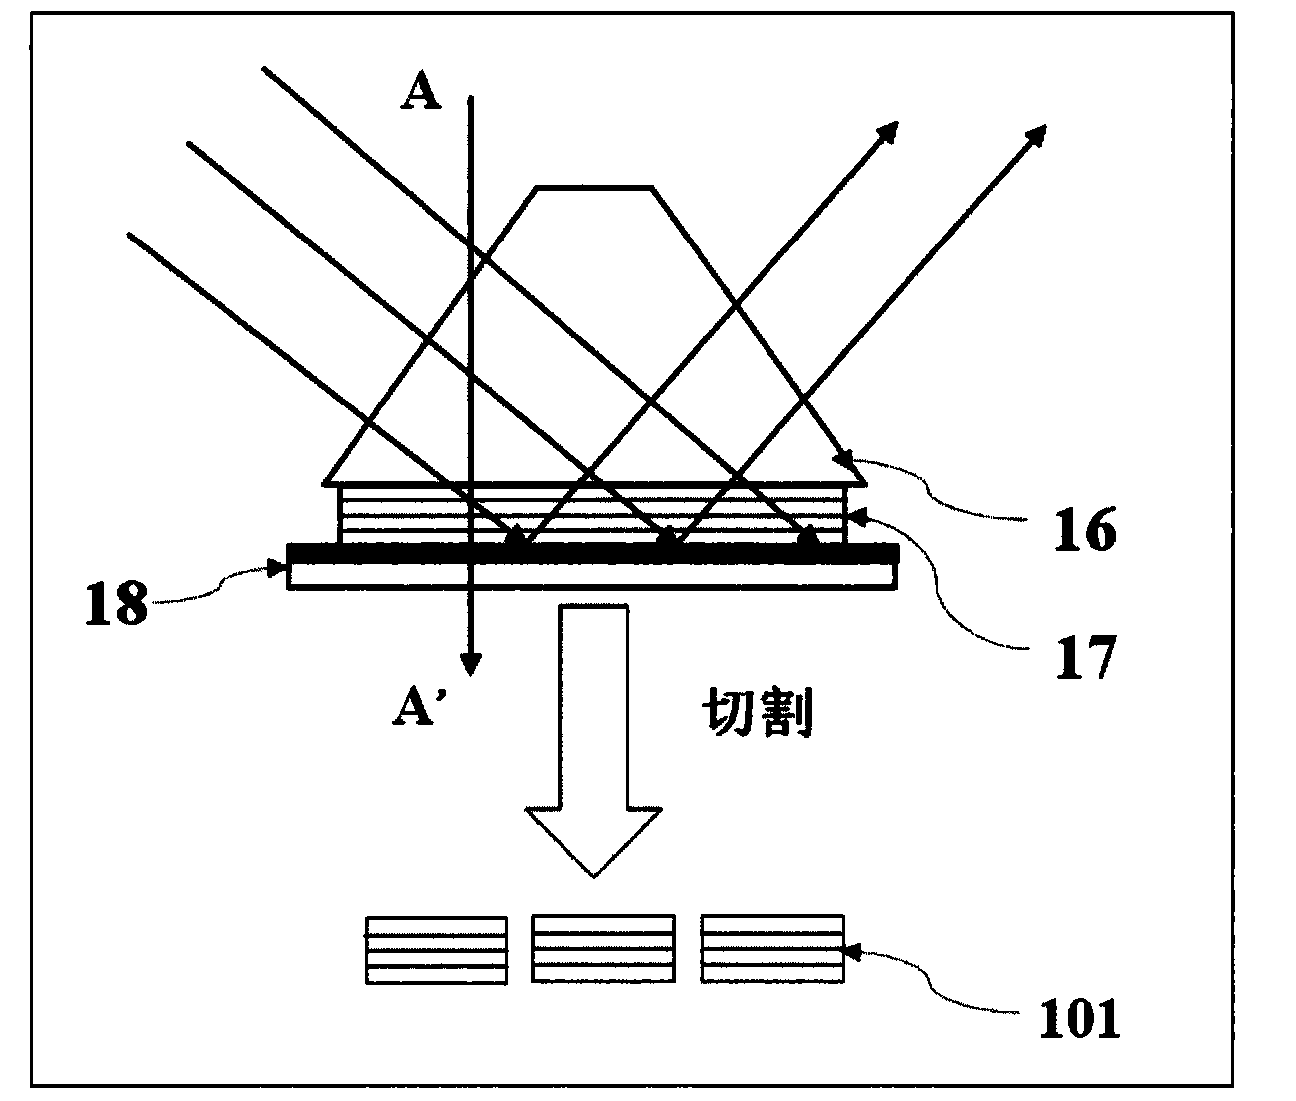 Method for manufacturing multi-wavelength volume bragg gratings